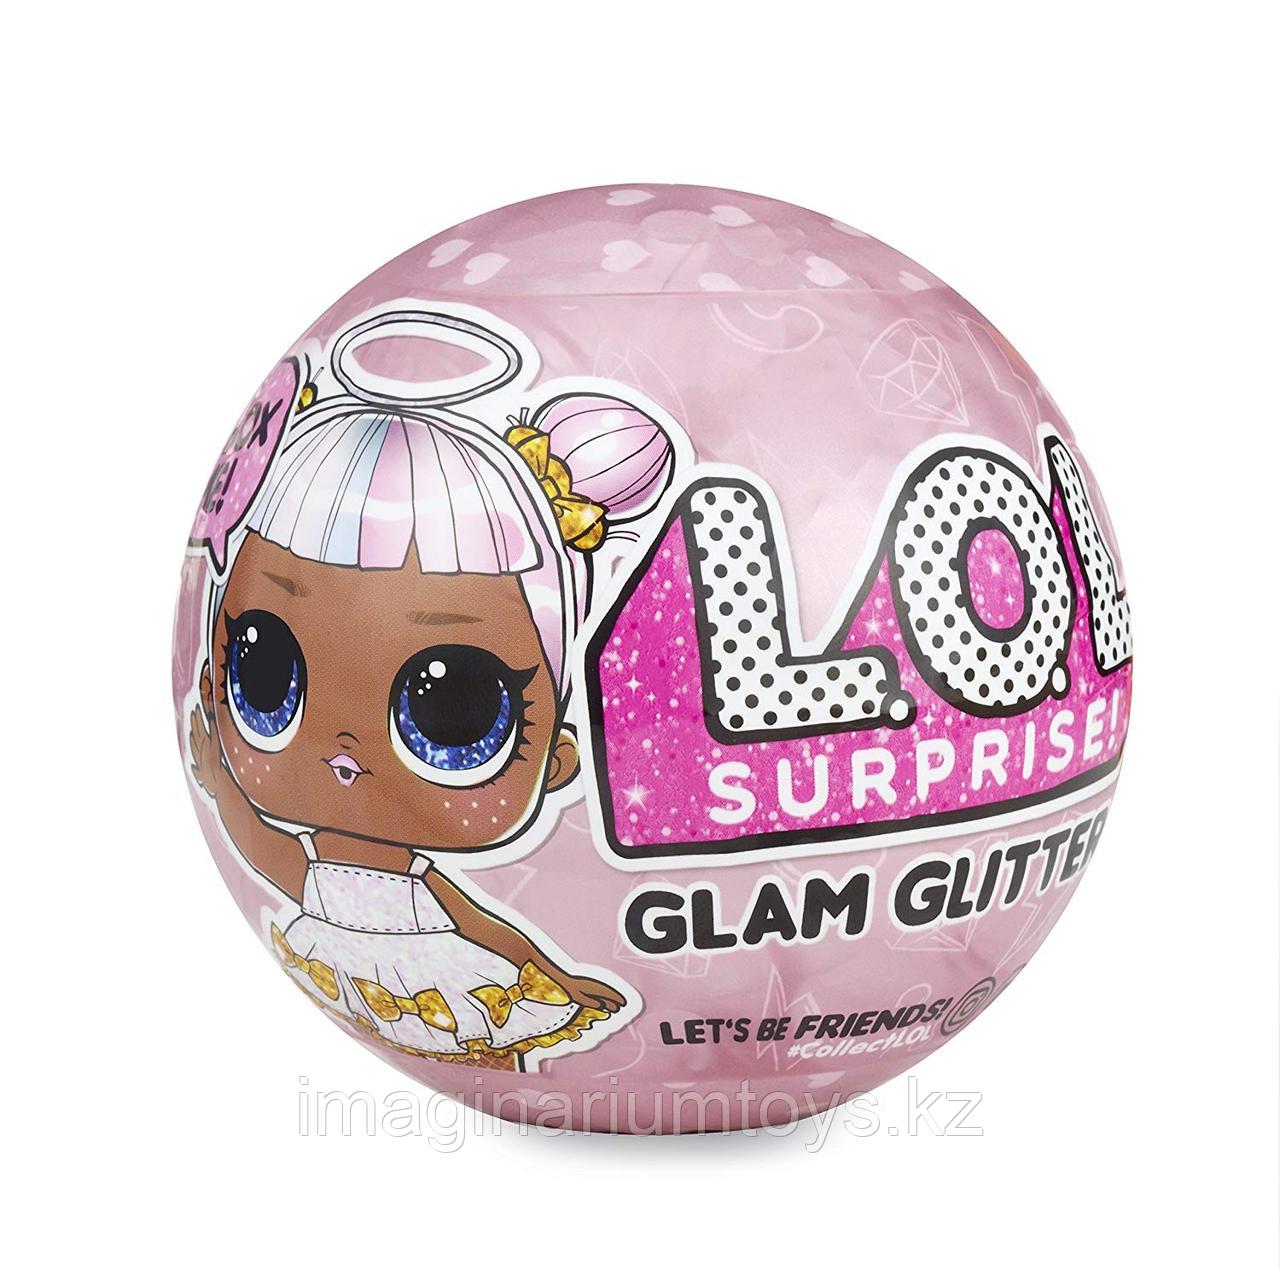 Кукла L.O.L. Surprise Glam Glitter, фото 1